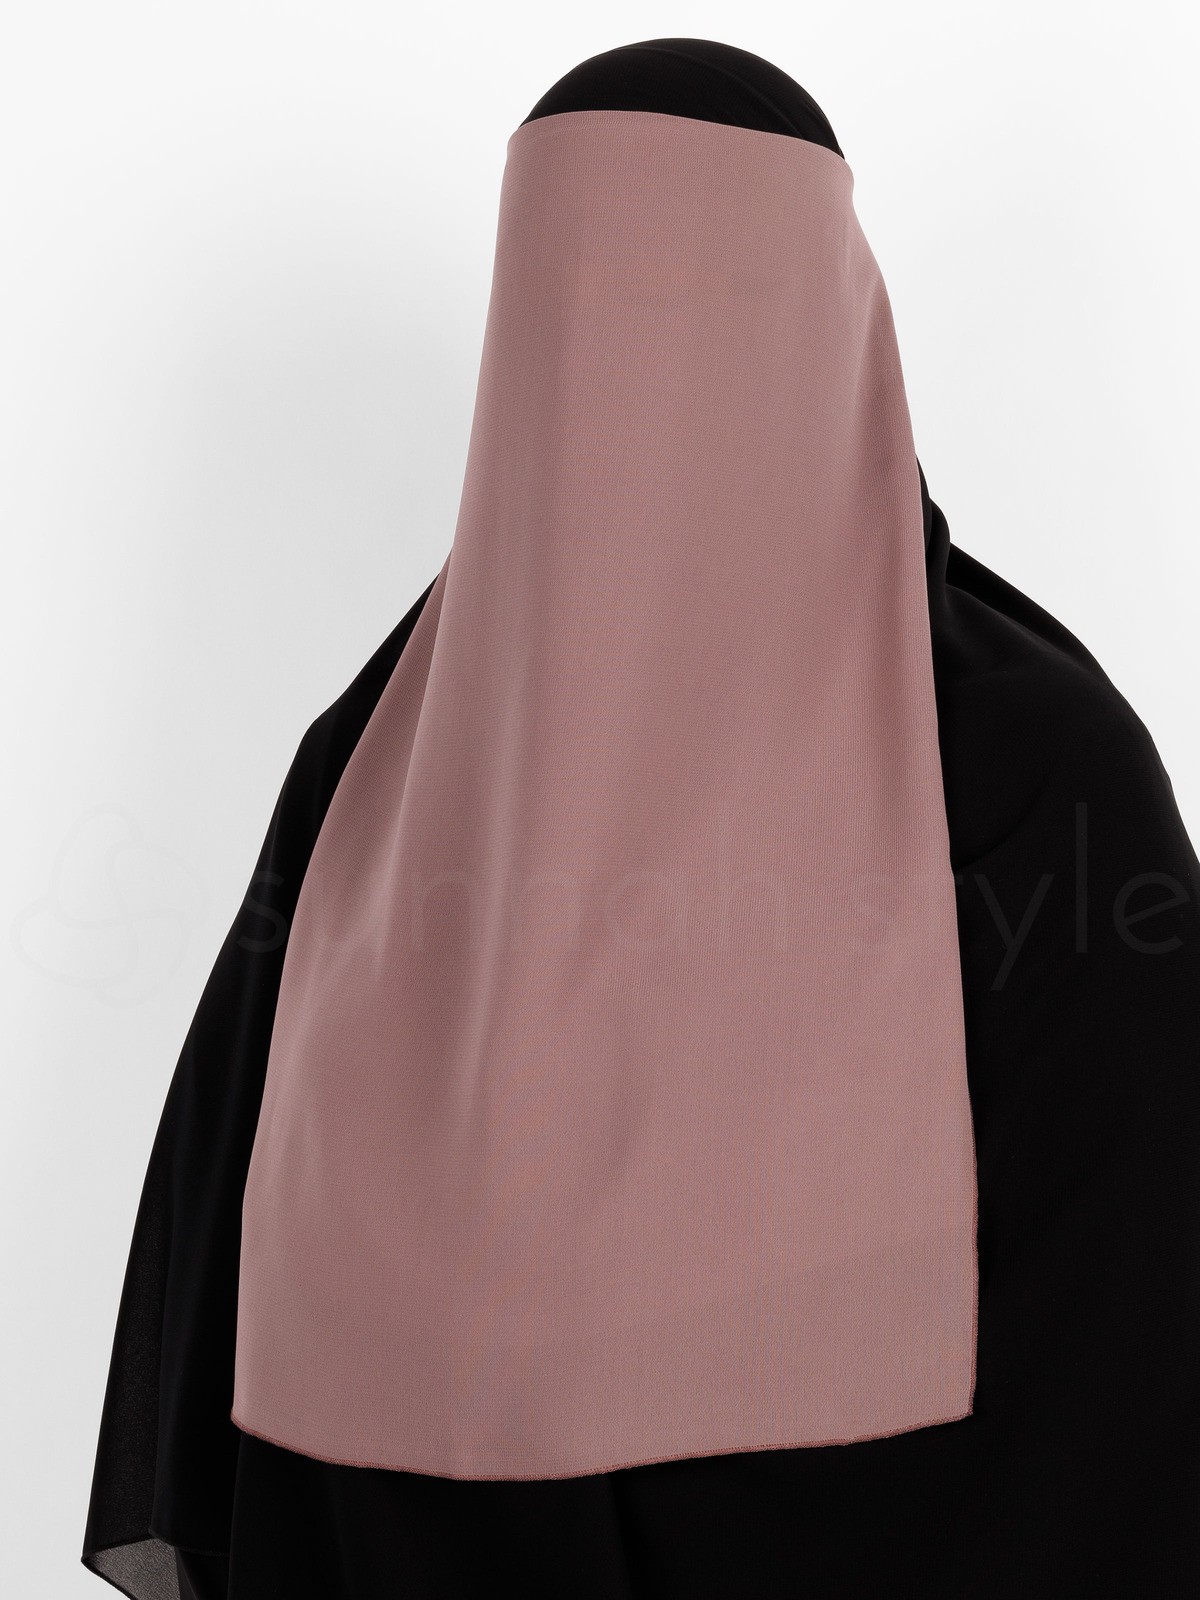 Sunnah Style - Two Layer Niqab (Twilight Mauve)